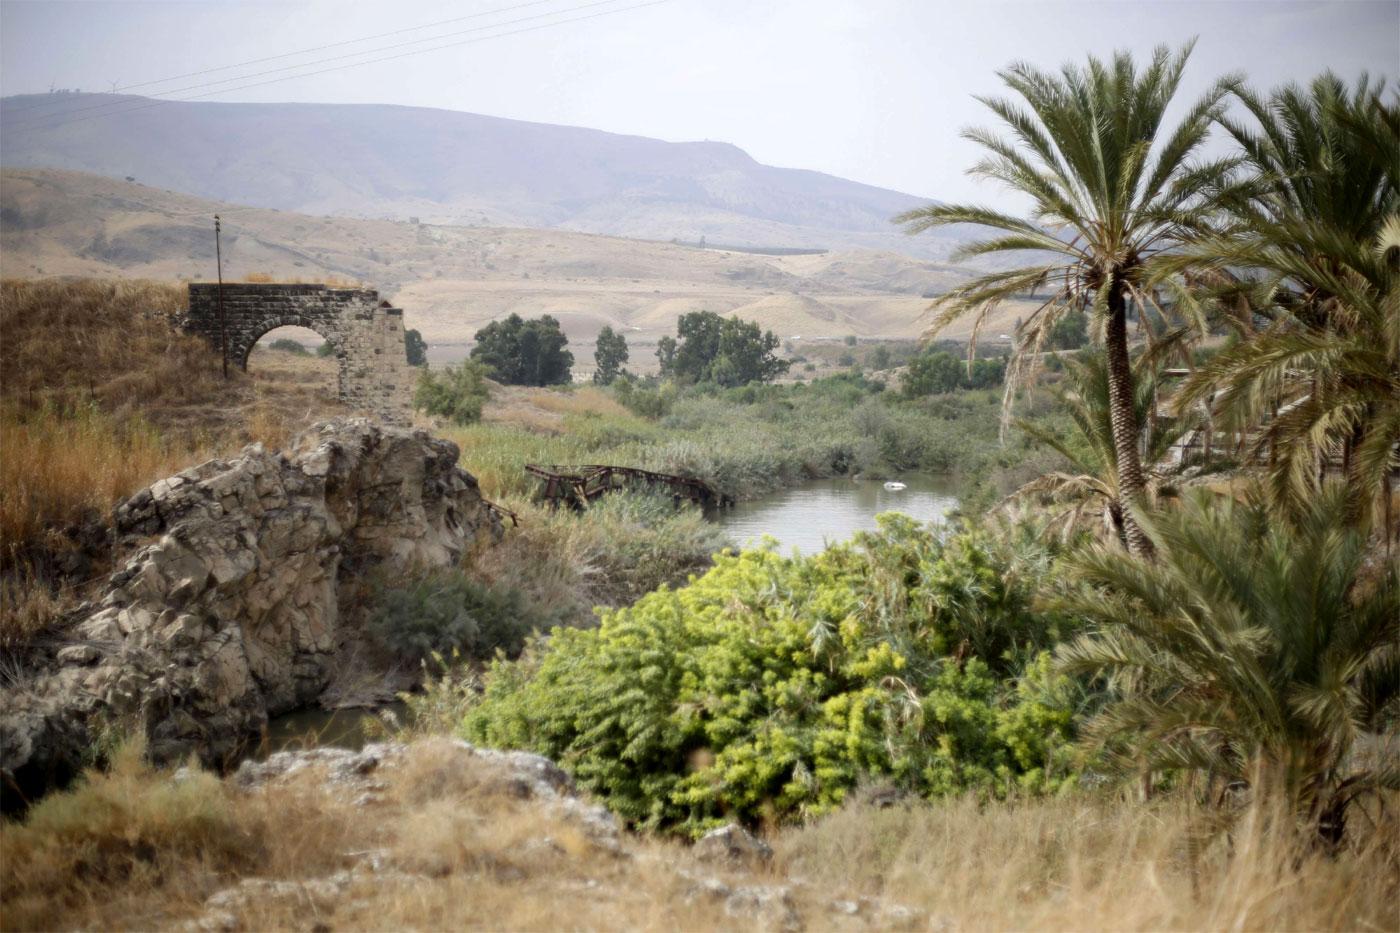 The Jordan river flows in the Jordan valley area called Baqura